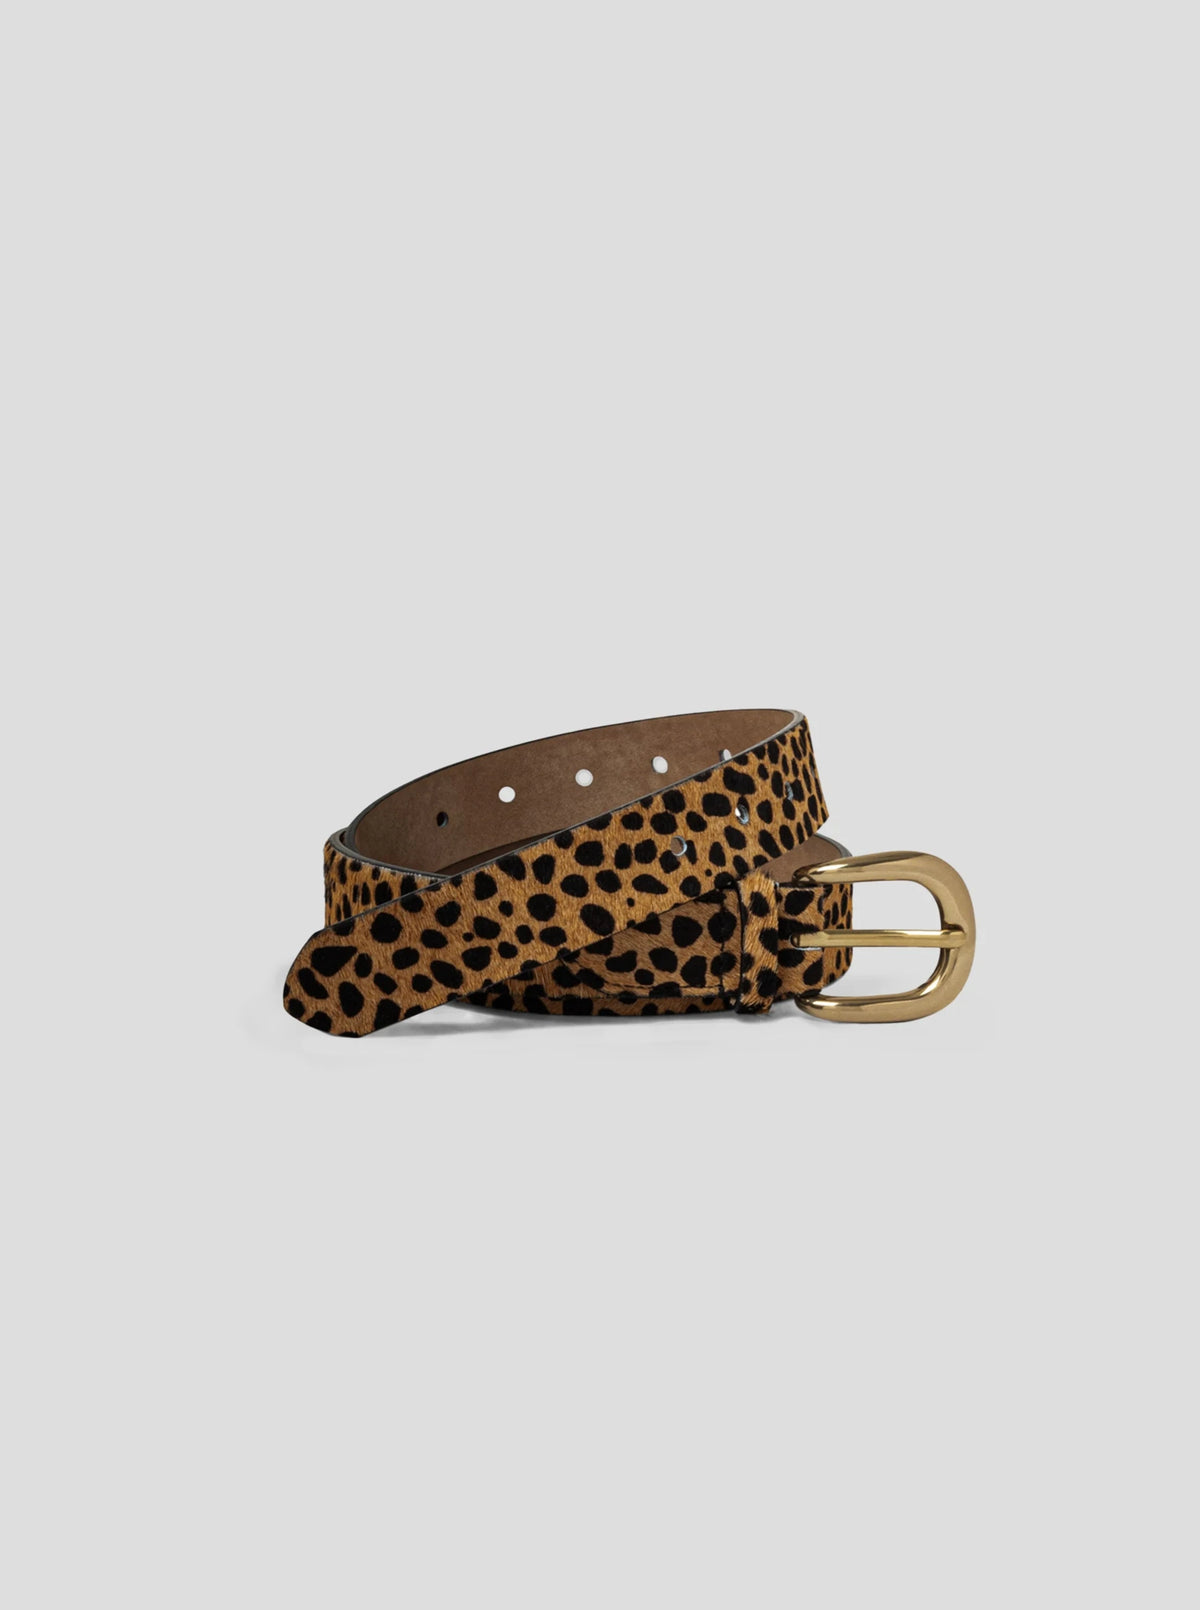 Belt in Cheetah printed leather